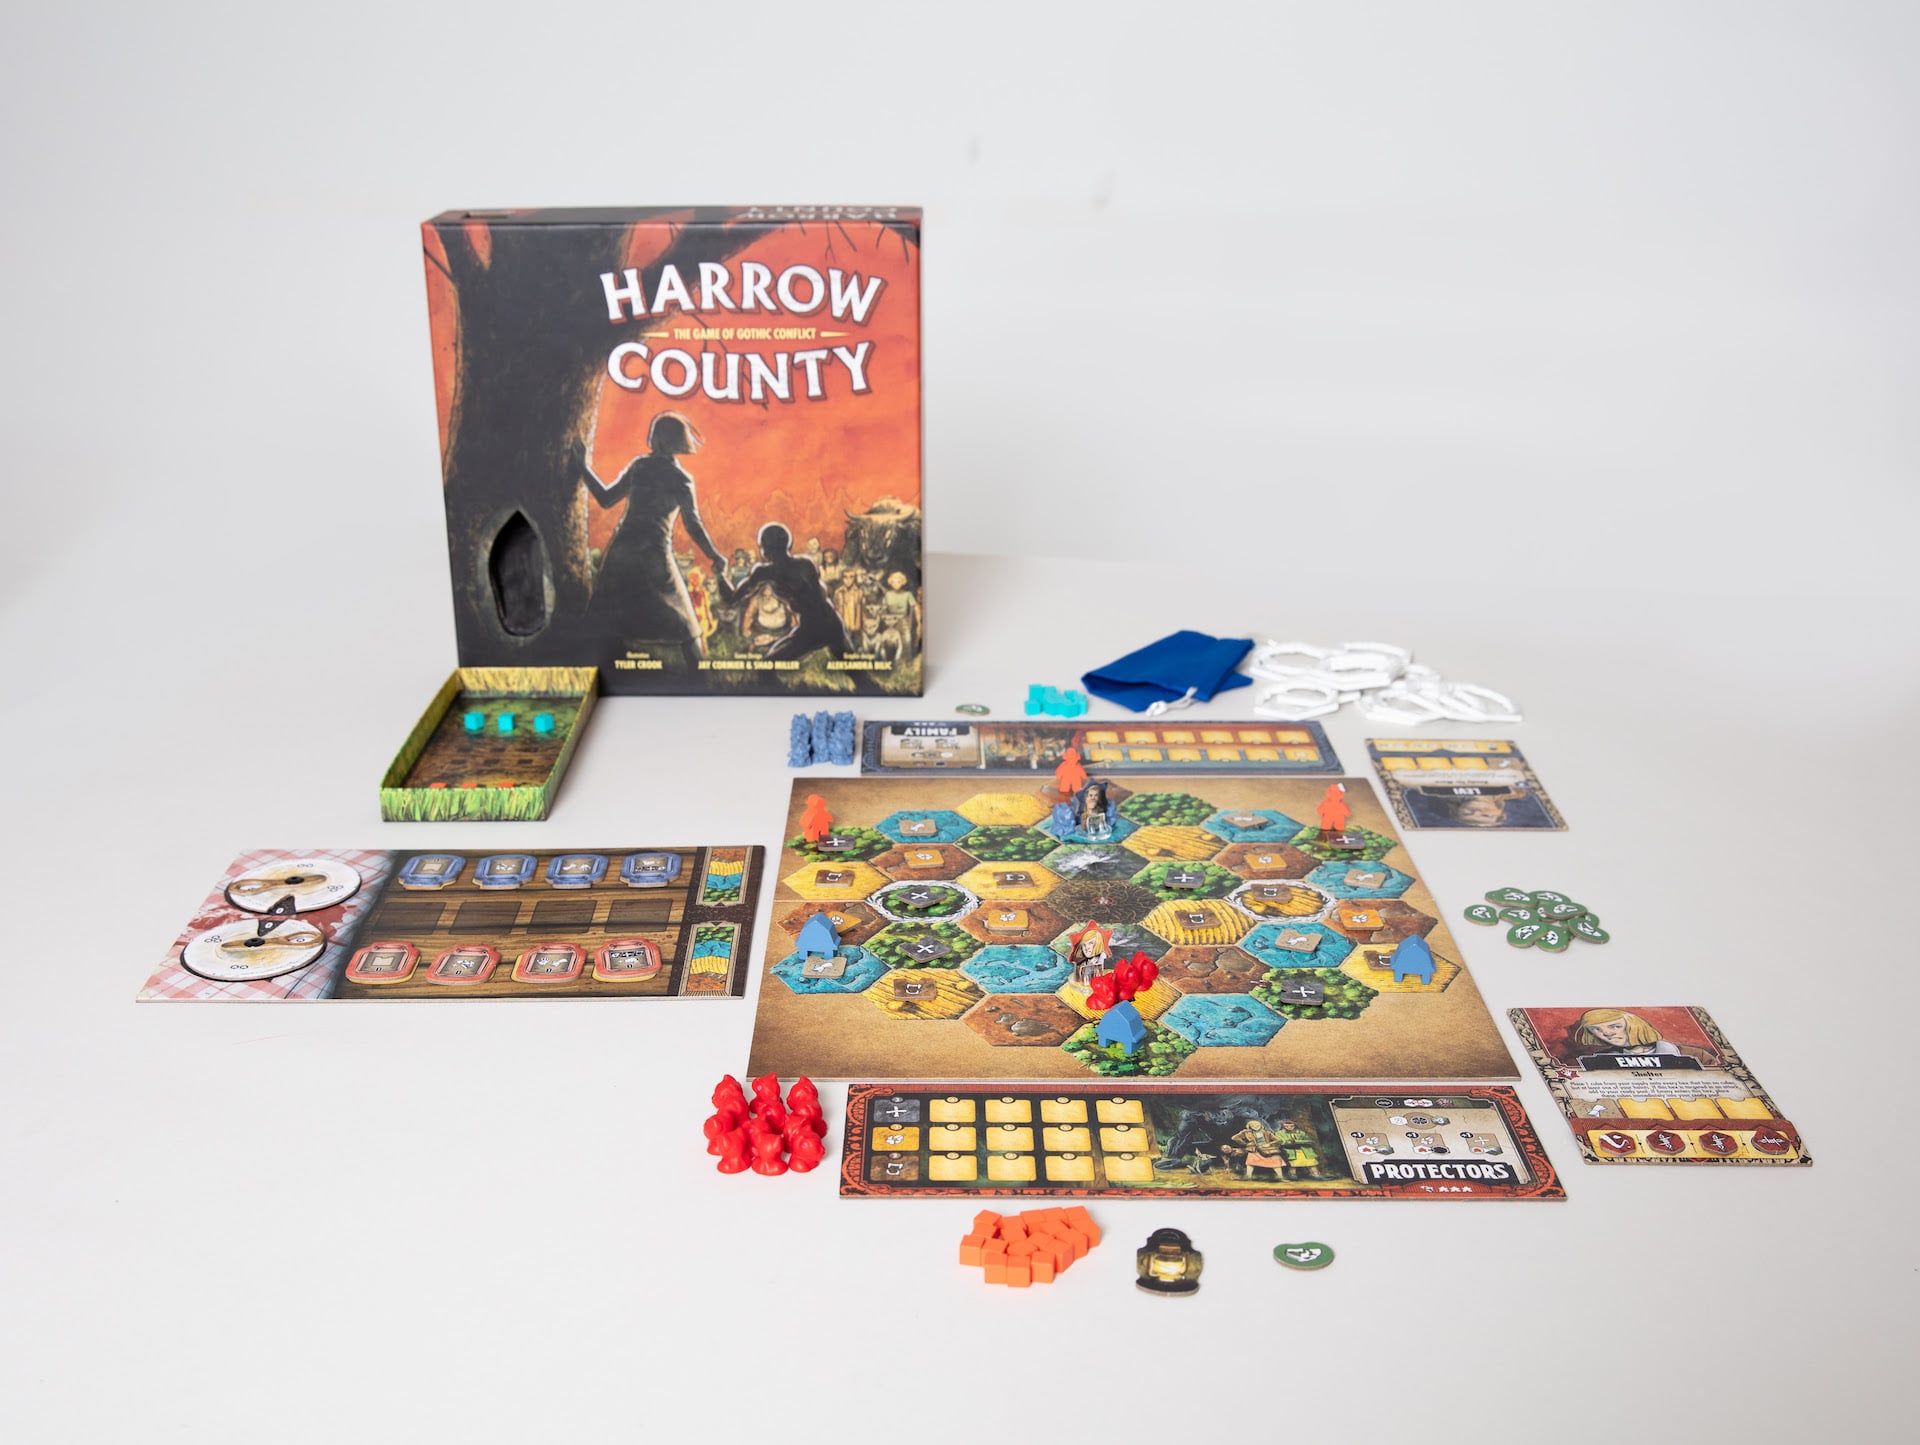 Kickstarter Alert: Harrow County: The Game of Gothic Conflict